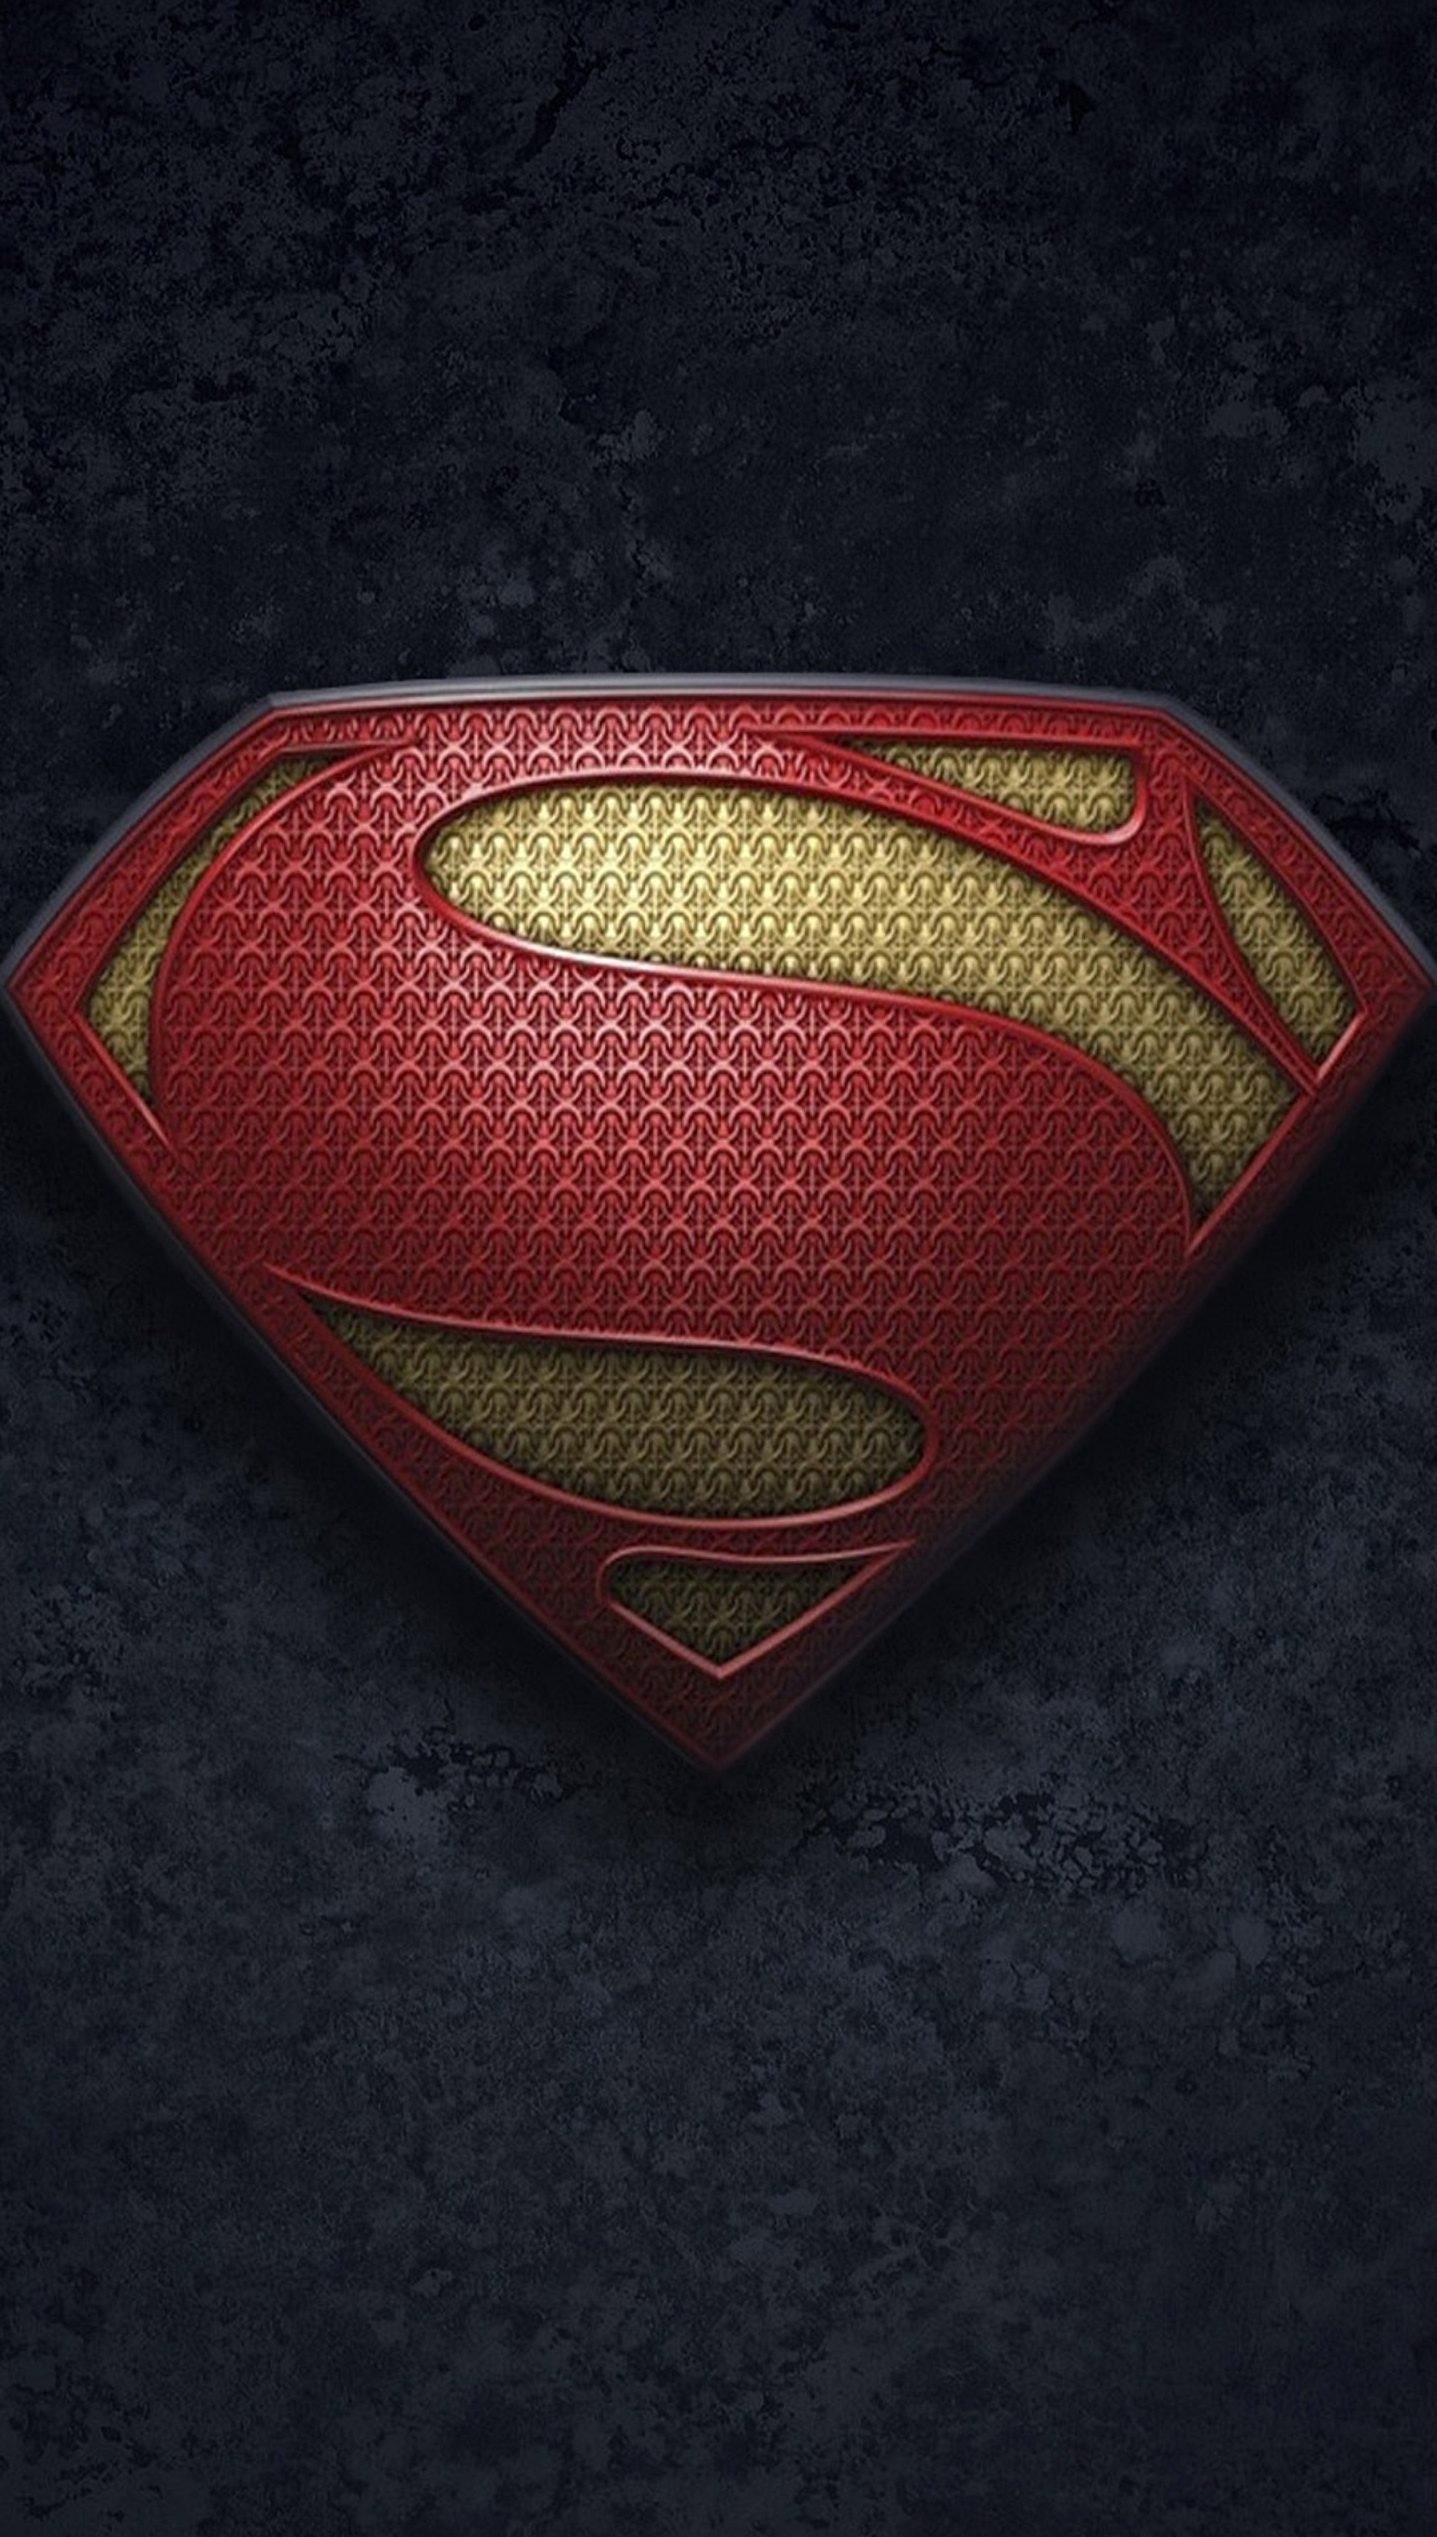 cool lock screen wallpaper,superman,red,justice league,fictional character,superhero